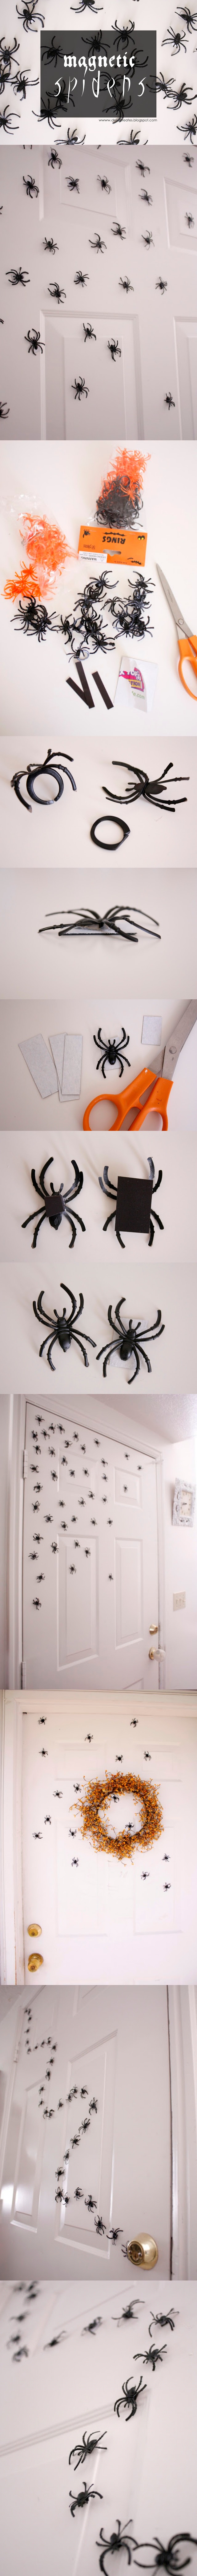 13. Halloween Magnetic Spiders